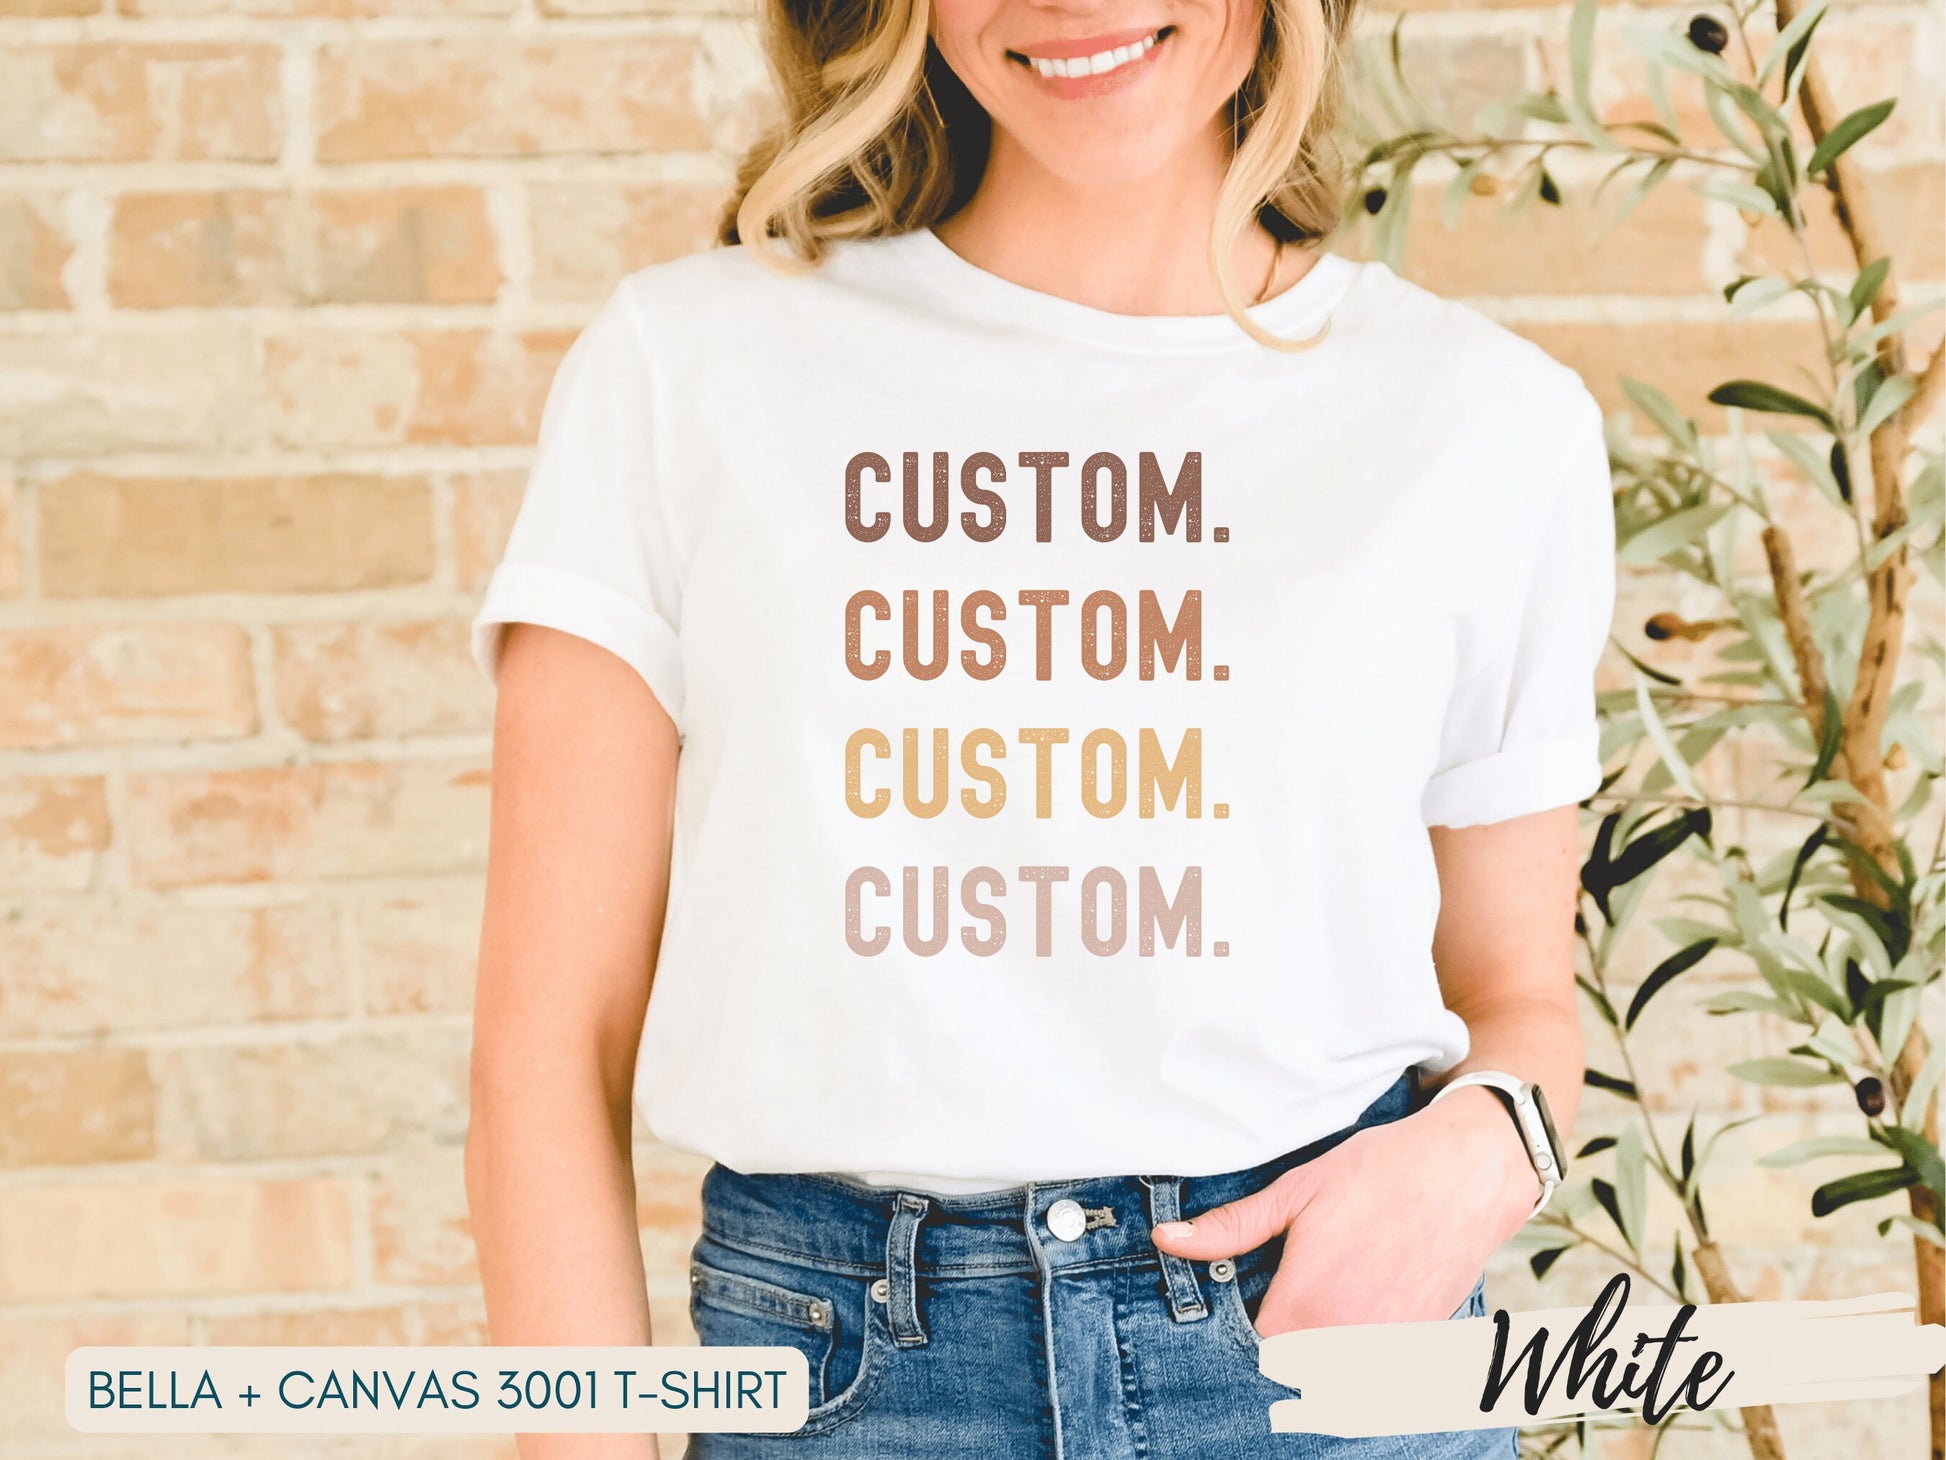 Custom Shirt Personalized Shirt, Custom Printing T-Shirt, Make Your Own Shirt, Custom Sweatshirt, Personalized Word Shirt, Custom Vintage - Mardonyx Sweatshirt